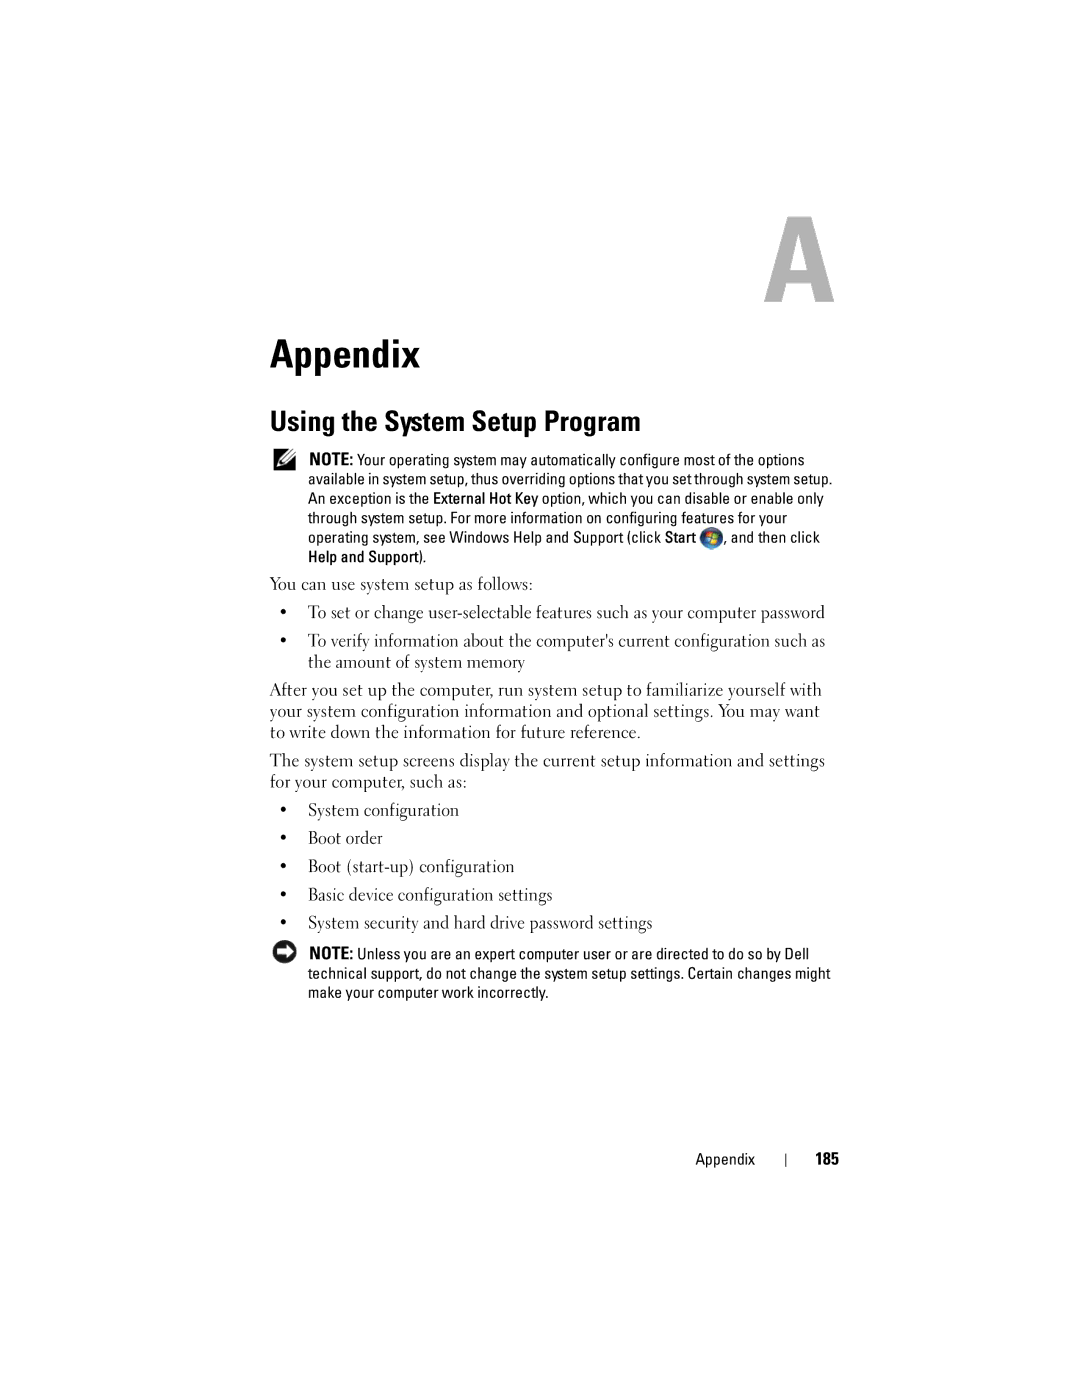 Dell GU051 manual Appendix, Using the System Setup Program, 185 